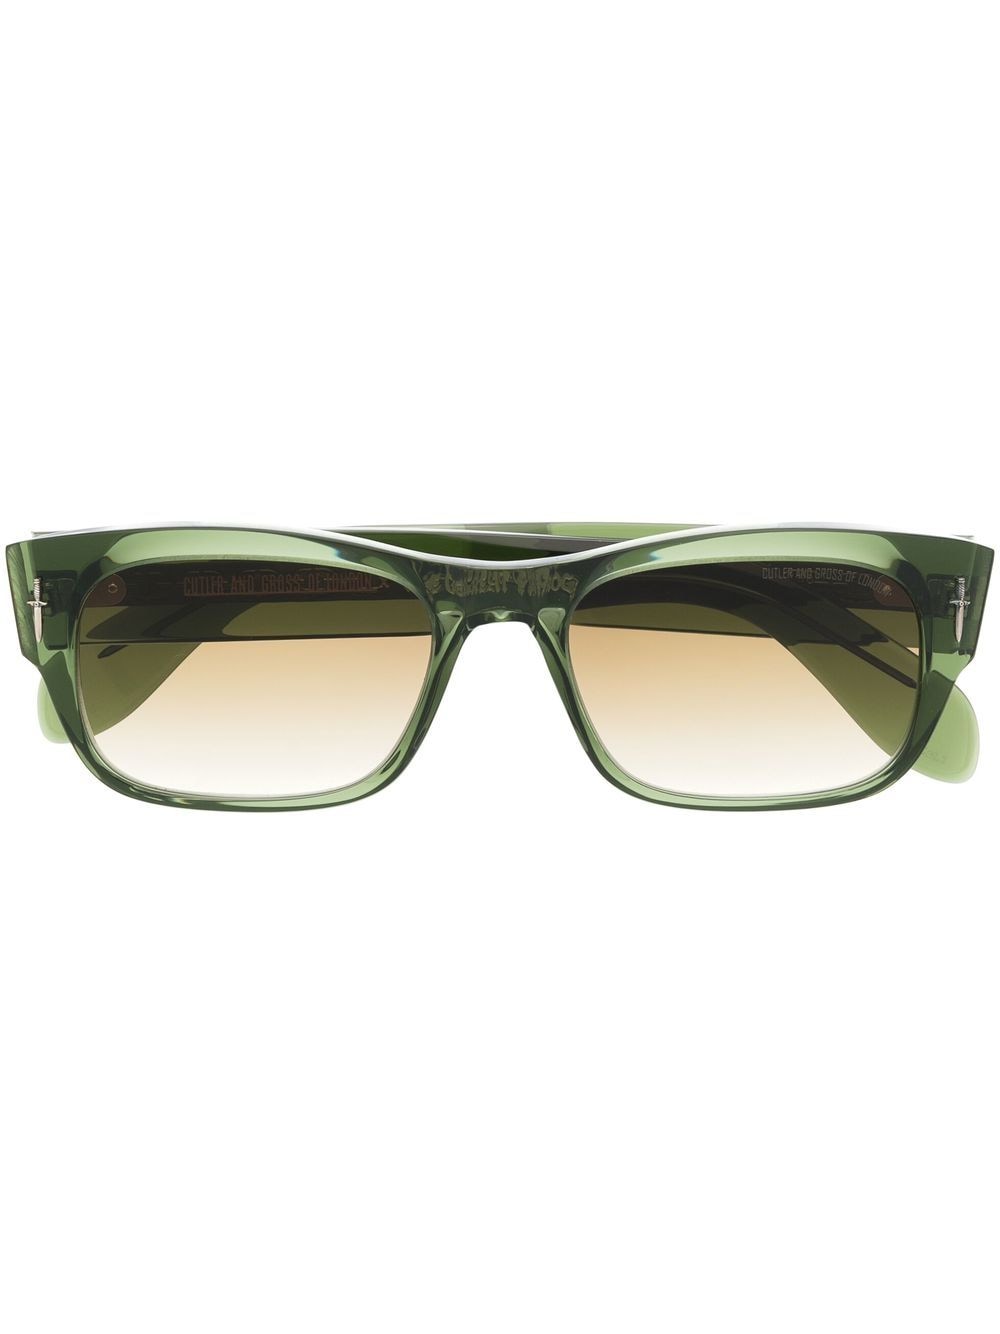 Cutler & Gross x The Great Frog square-frame sunglasses - Green von Cutler & Gross